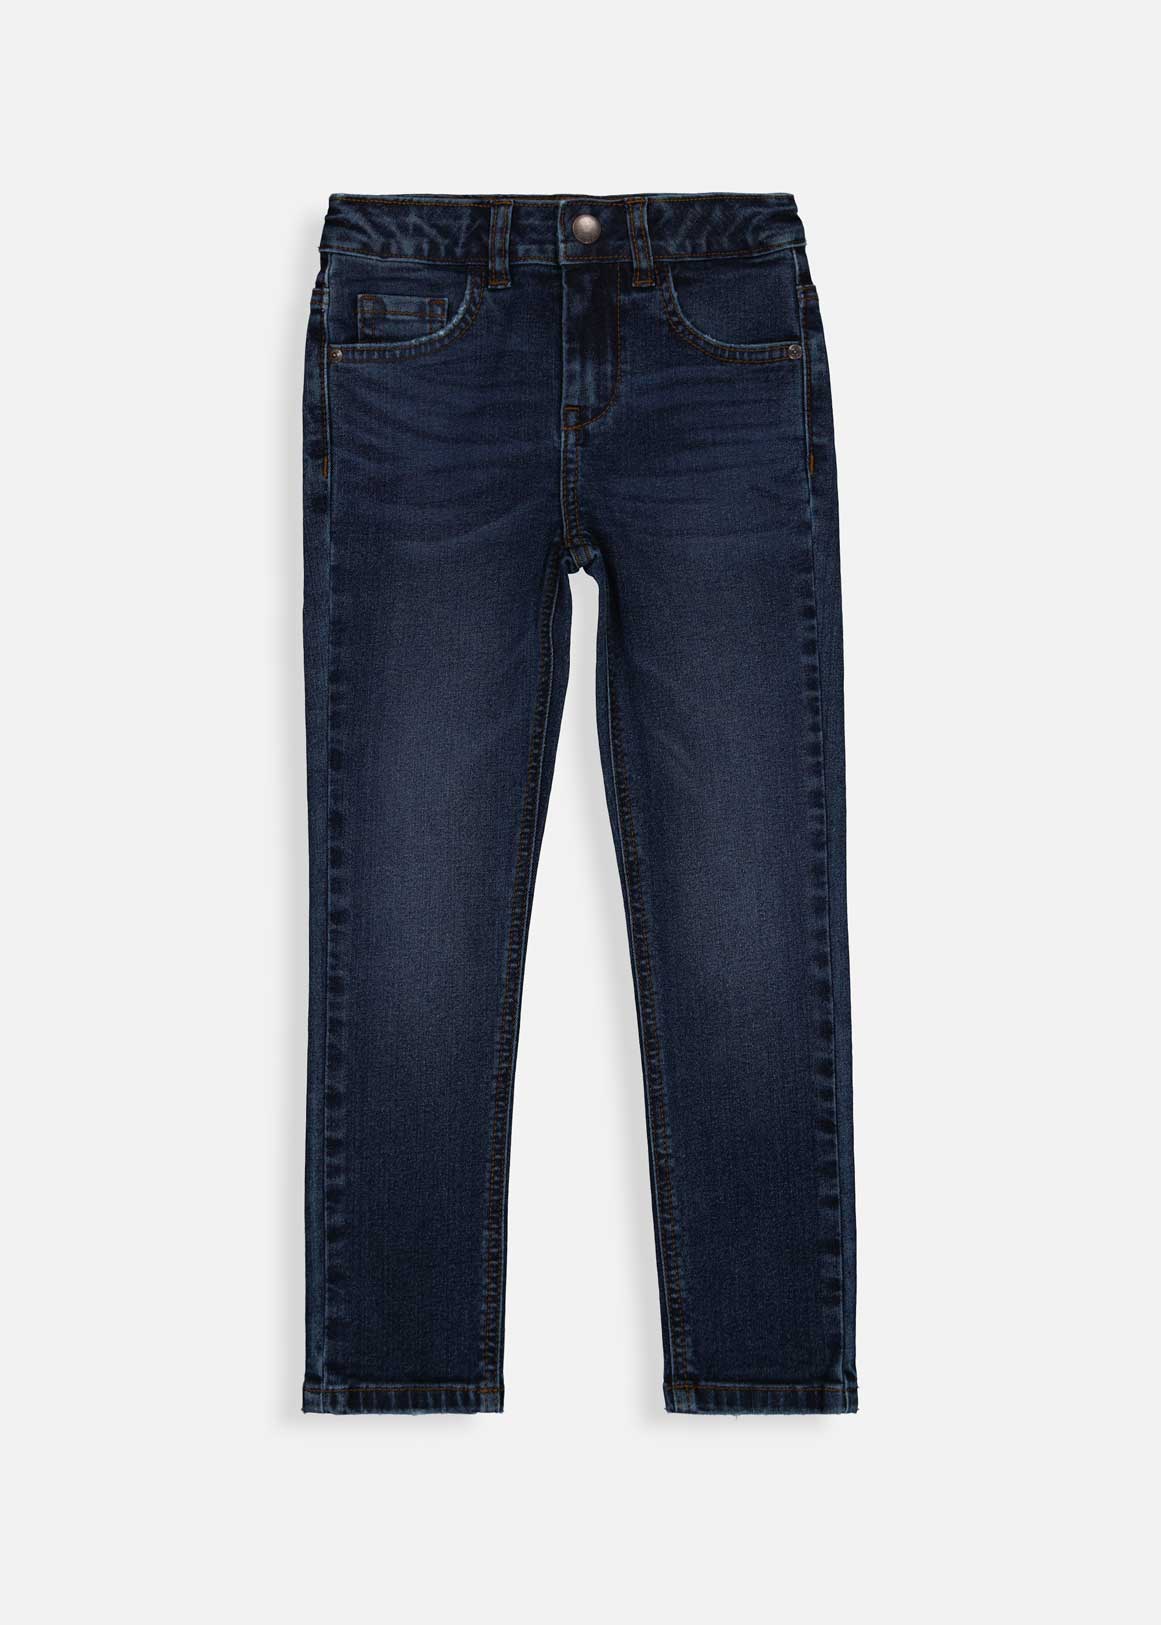 Adjustable Skinny Jeans | Woolworths.co.za